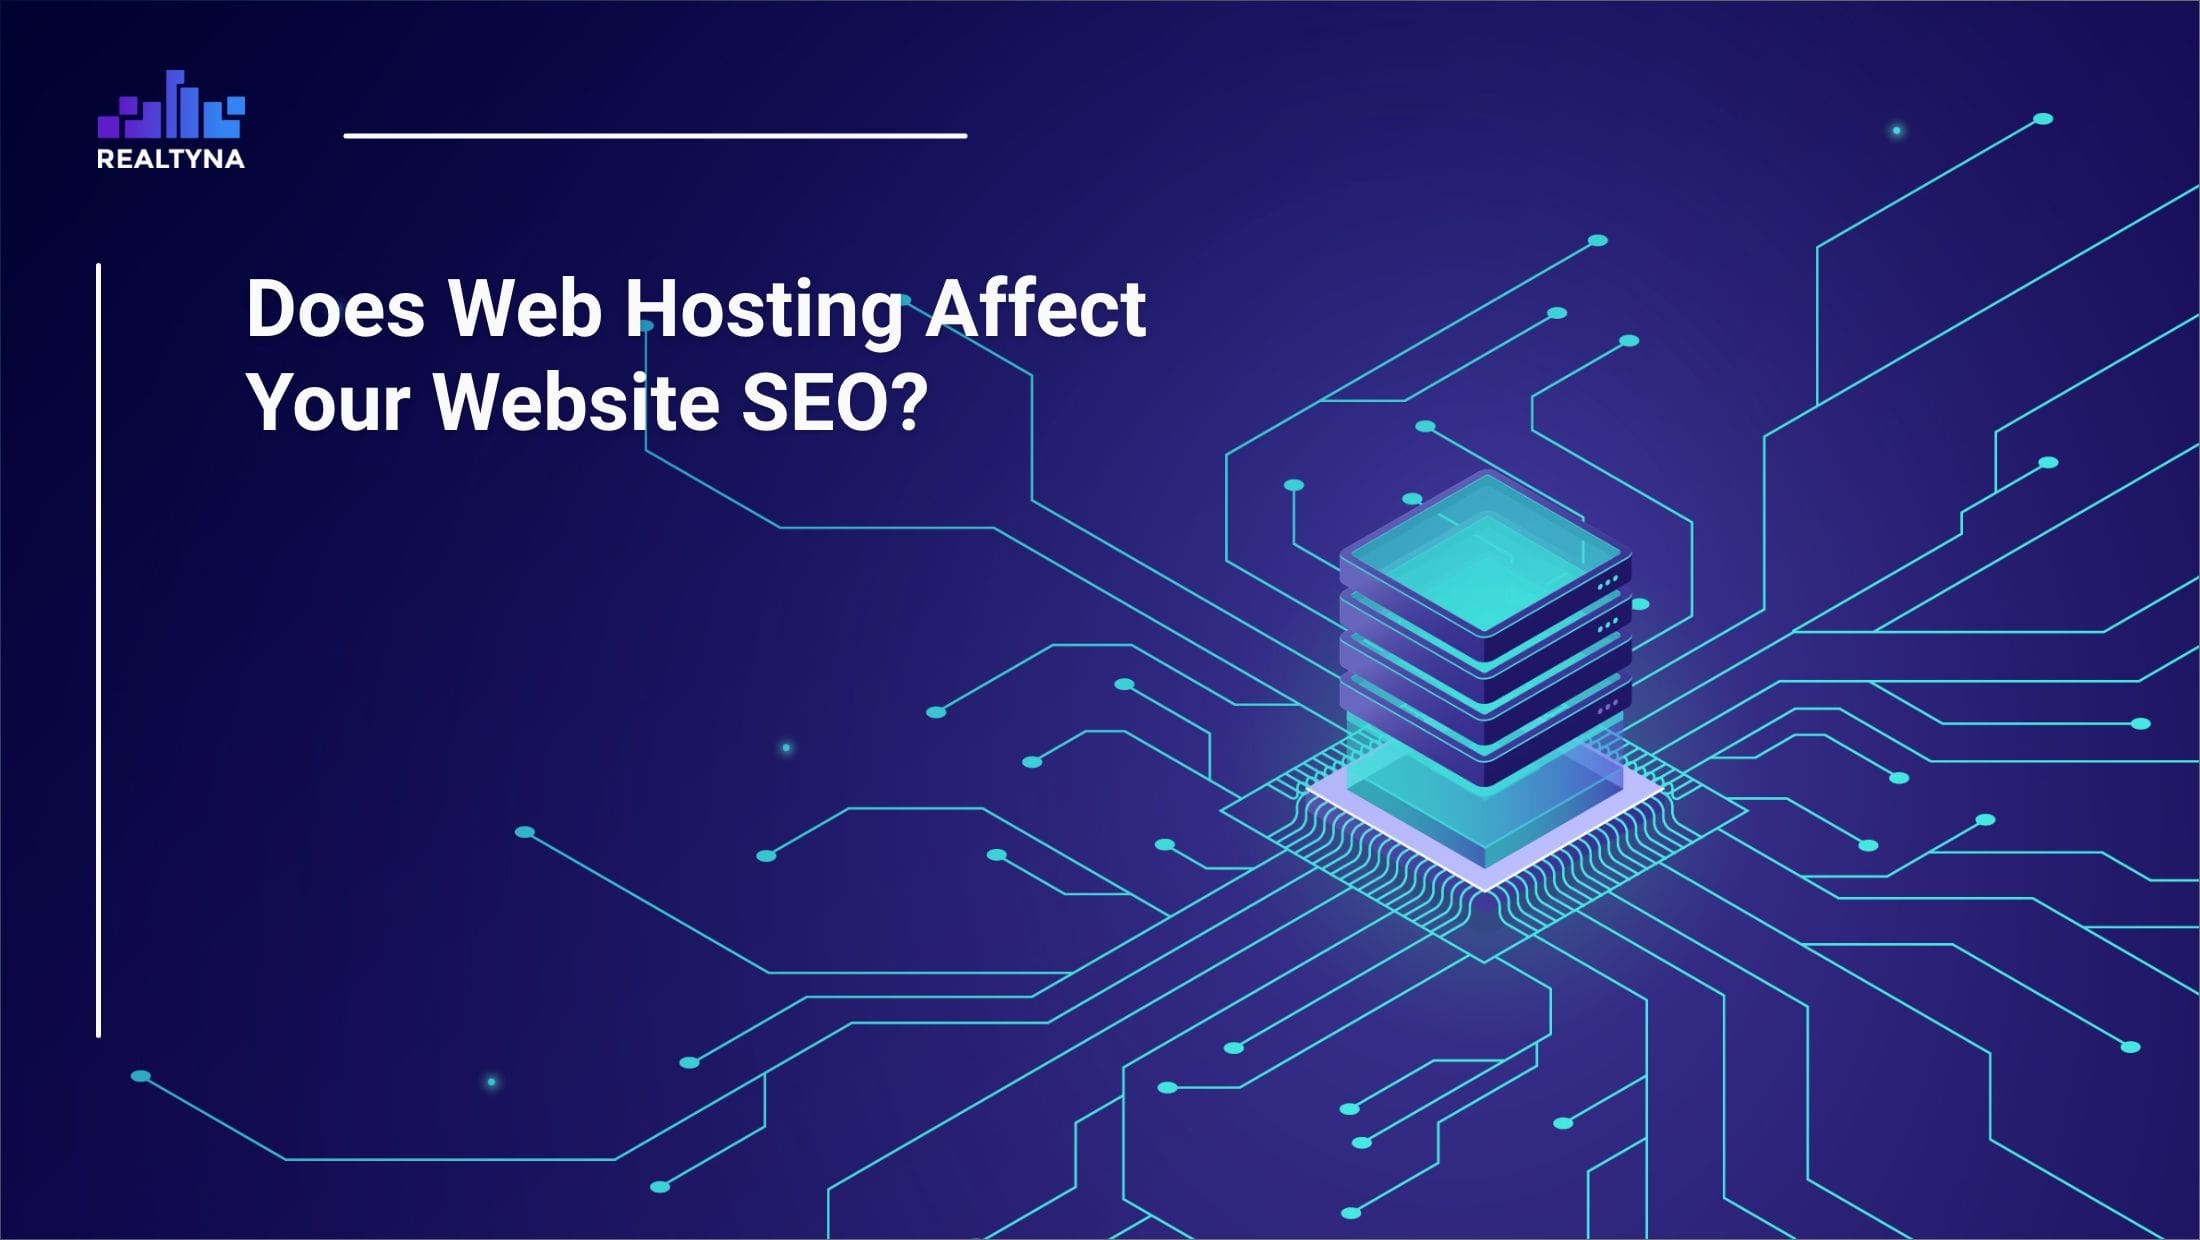 Does Web Hosting Affect Your Website SEO?